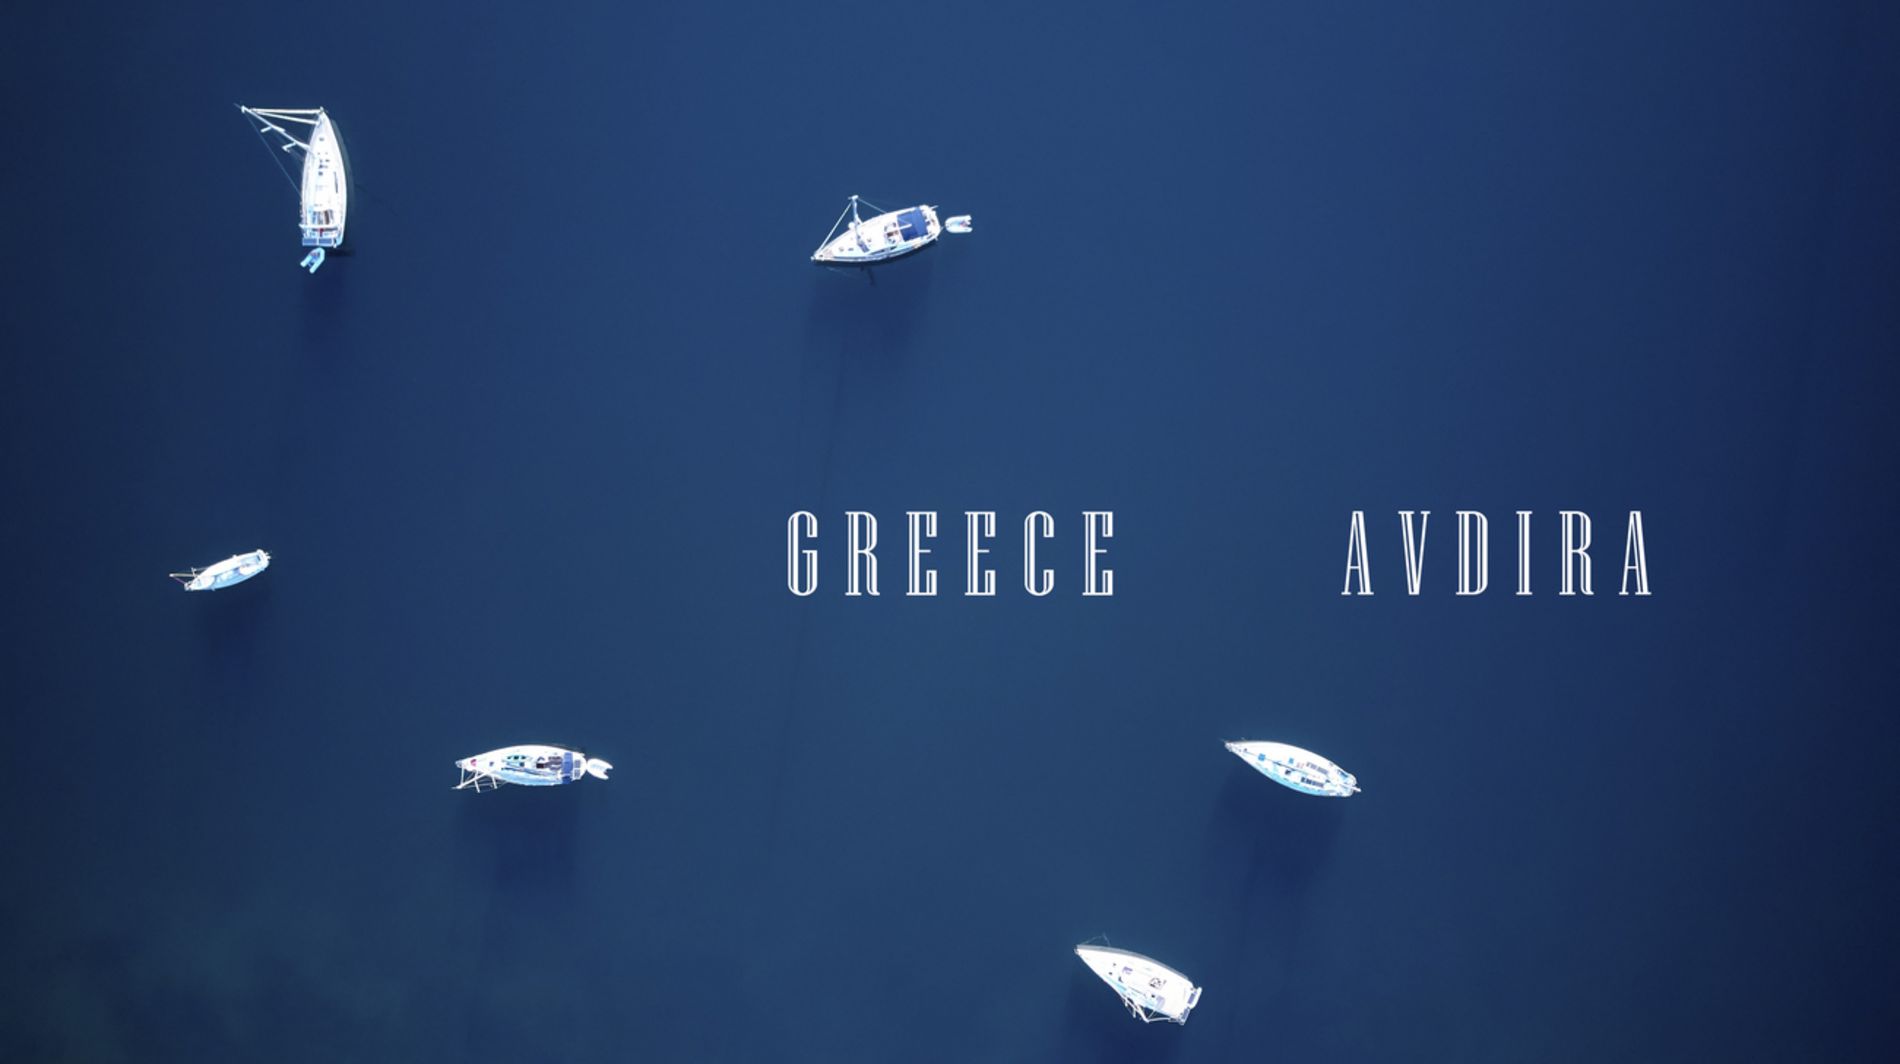 Avdira base - A secret world of sailing in Greece